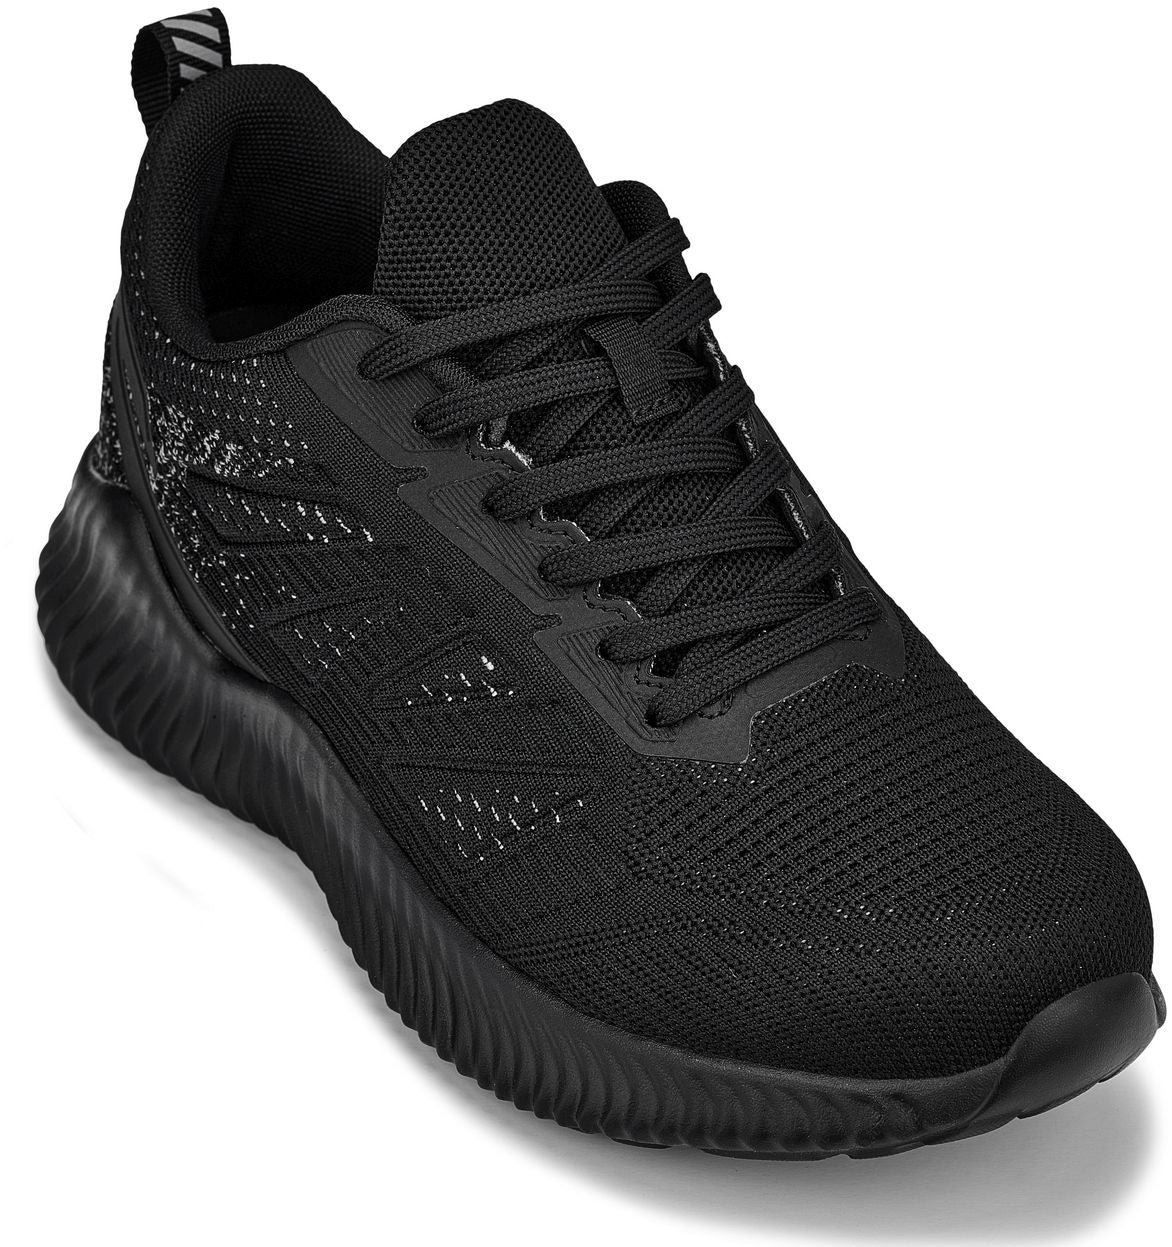 CALTO - Q220 - 2.6 بوصة أطول (أسود/رمادي ثلجي) - أحذية رياضية خفيفة الوزن